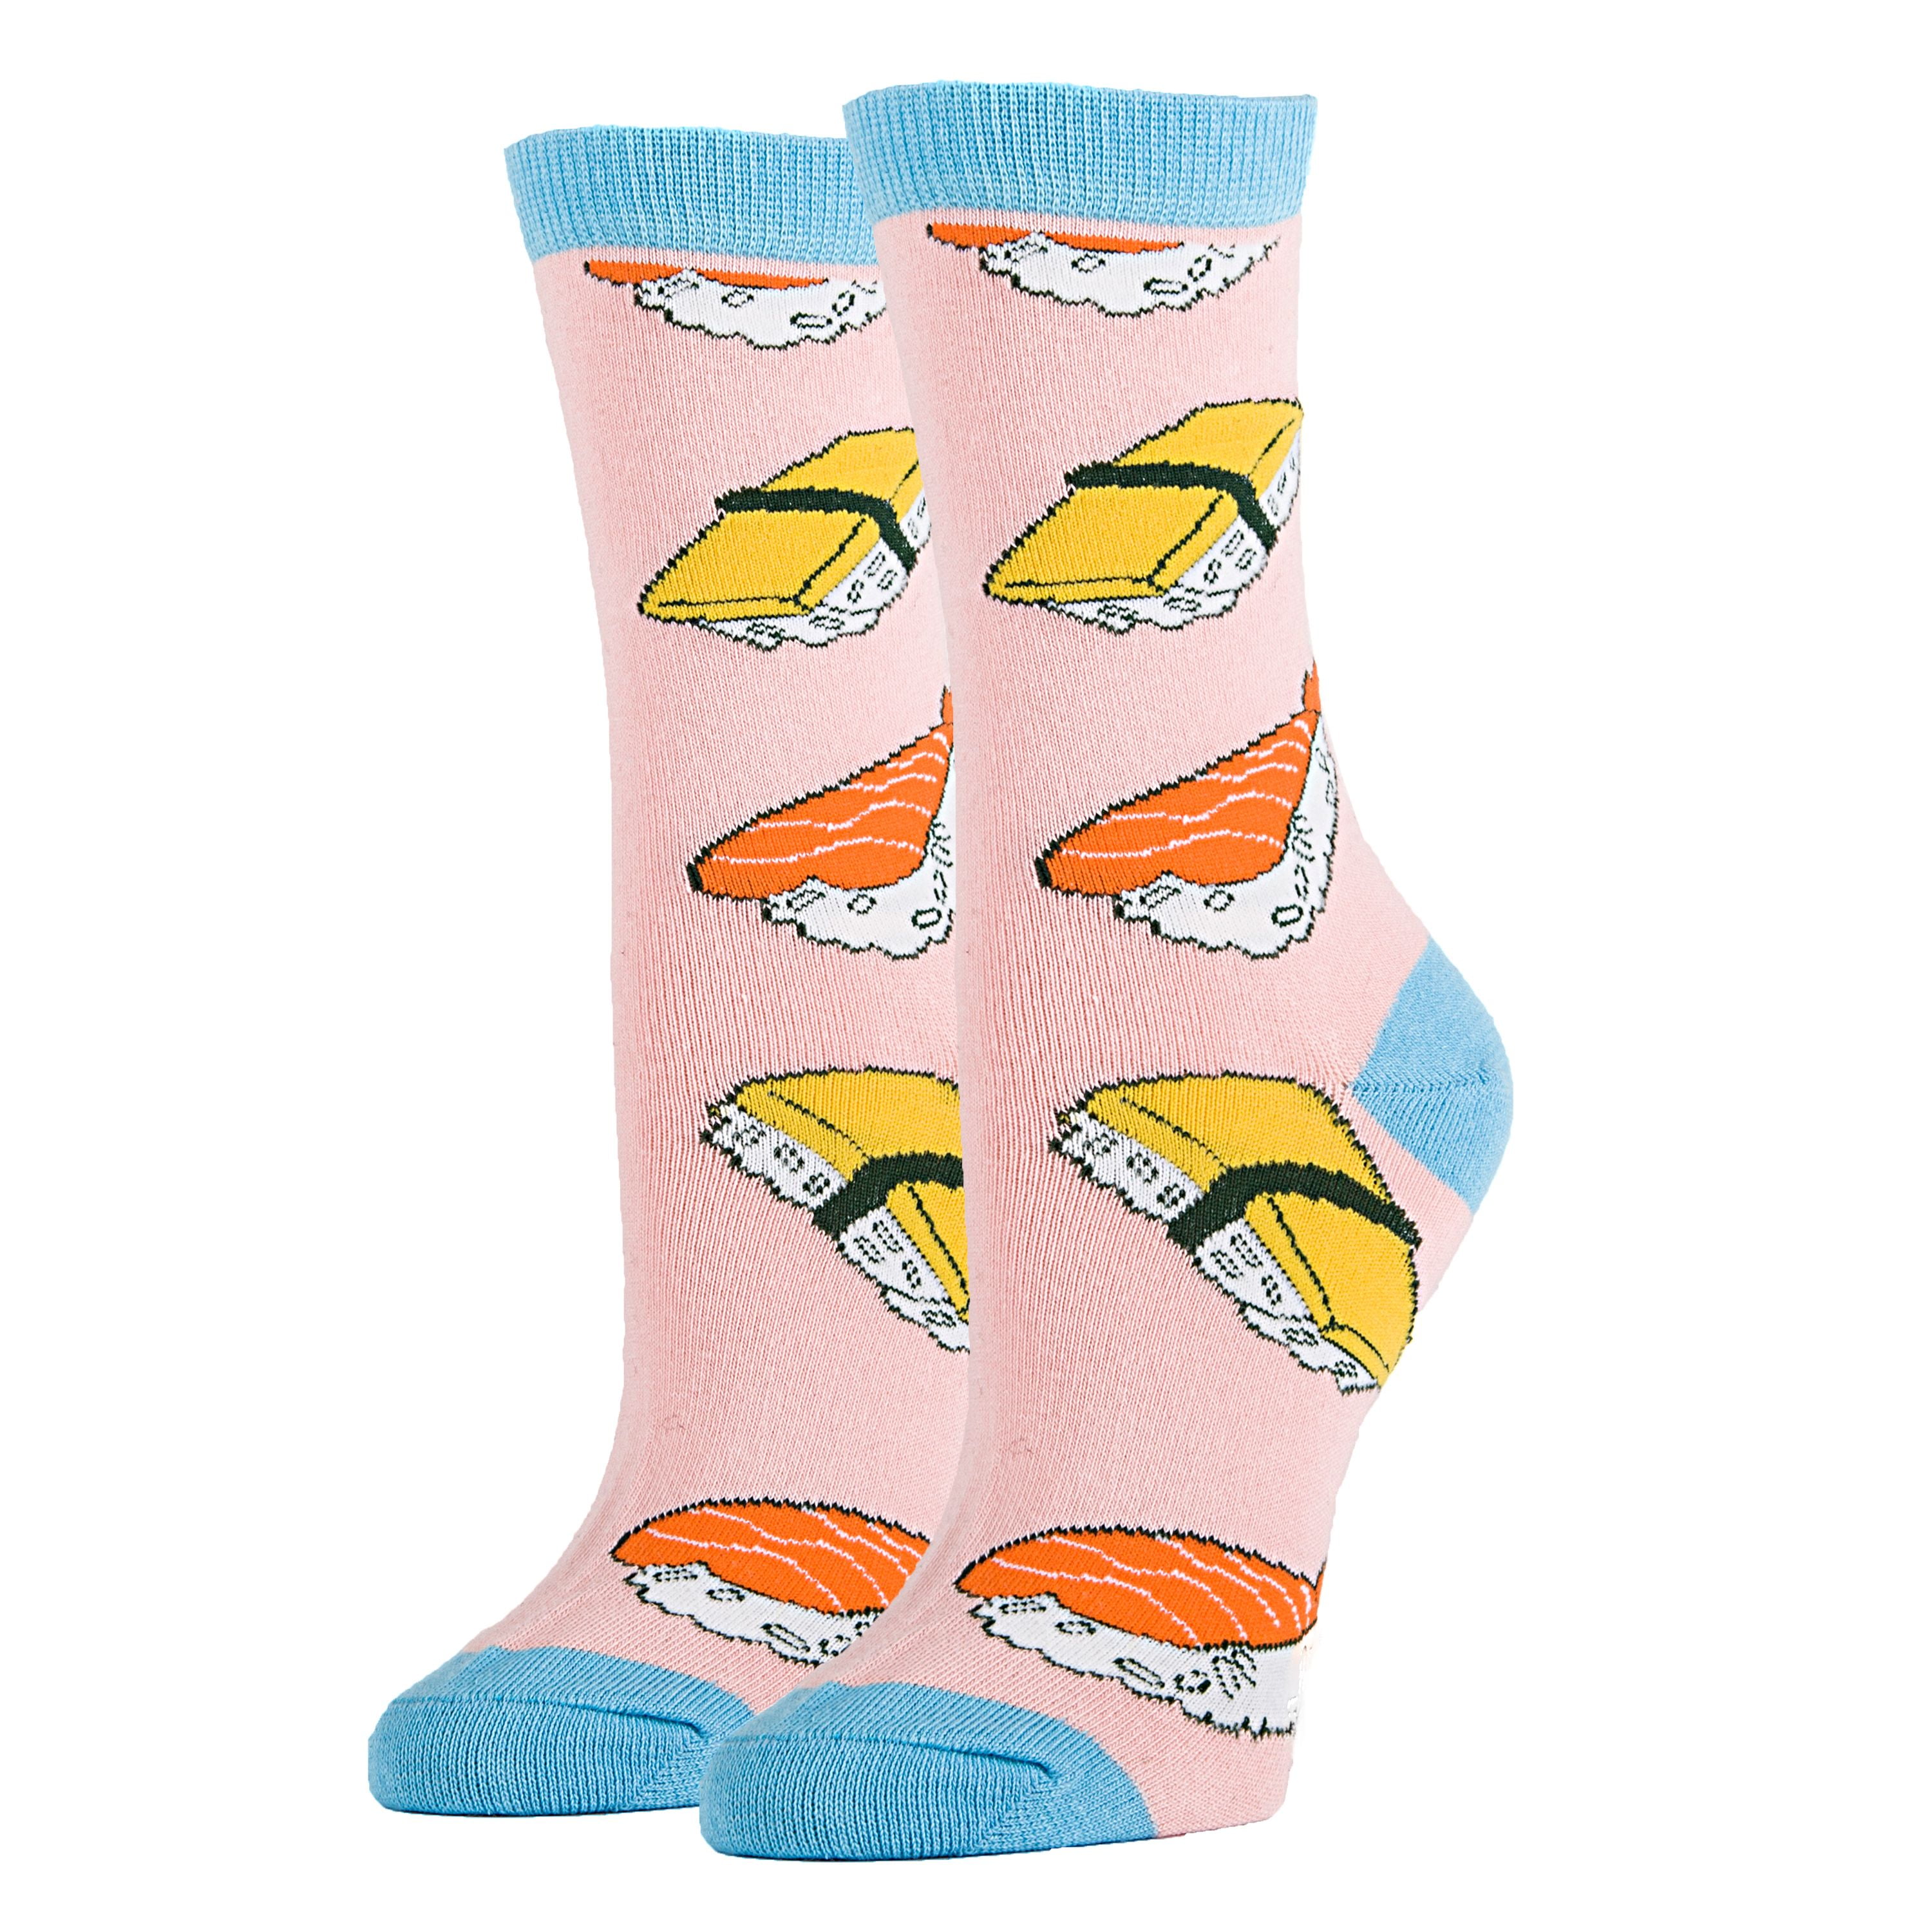 OoohYeah Womens Novelty Crew Socks, Crazy Funny Fashion Socks (Sushi ...